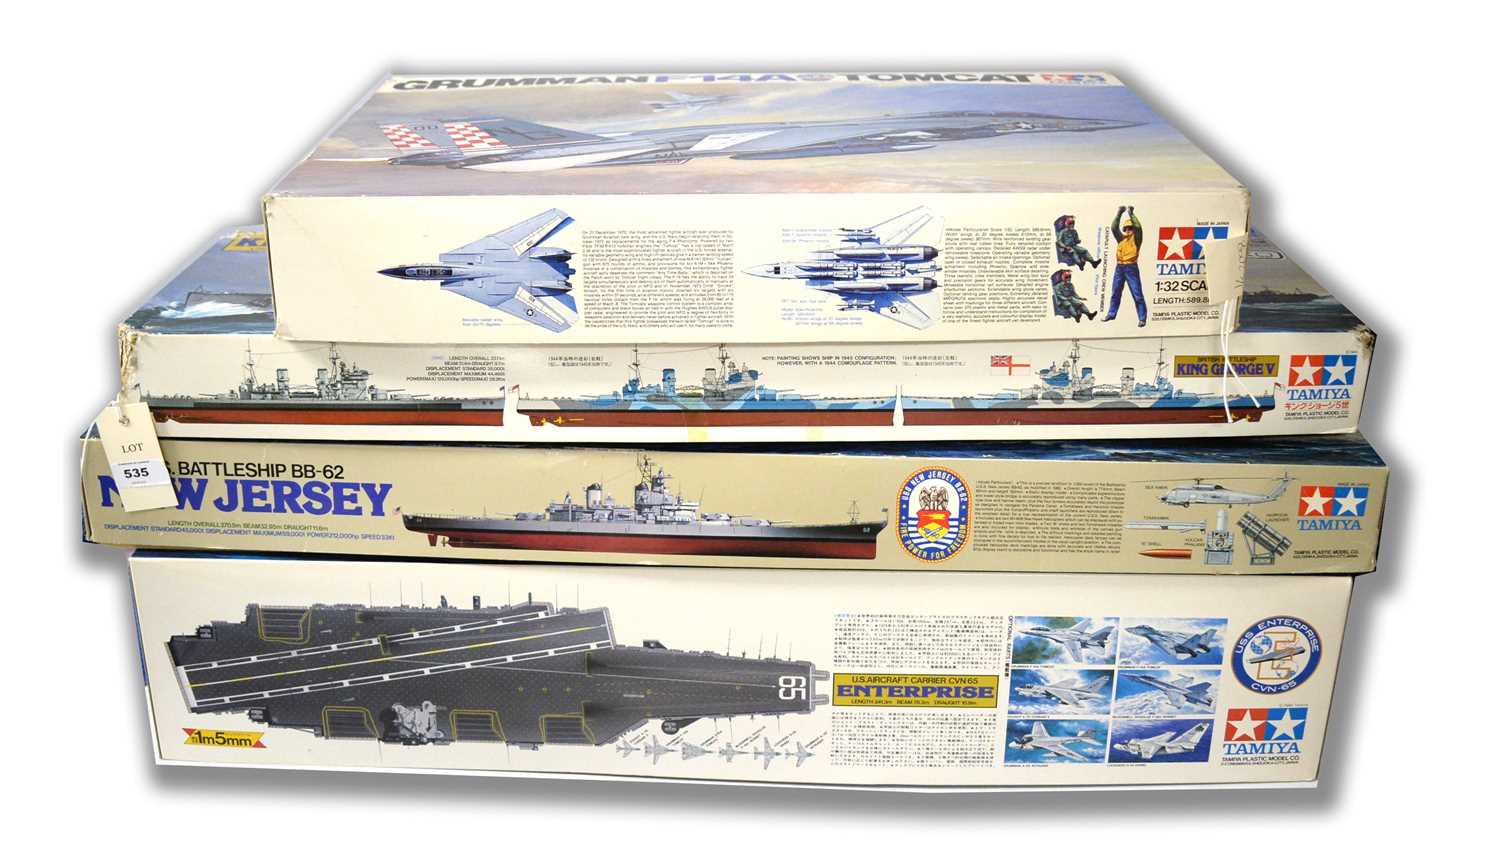 A selection of Tamiya scale model kits.